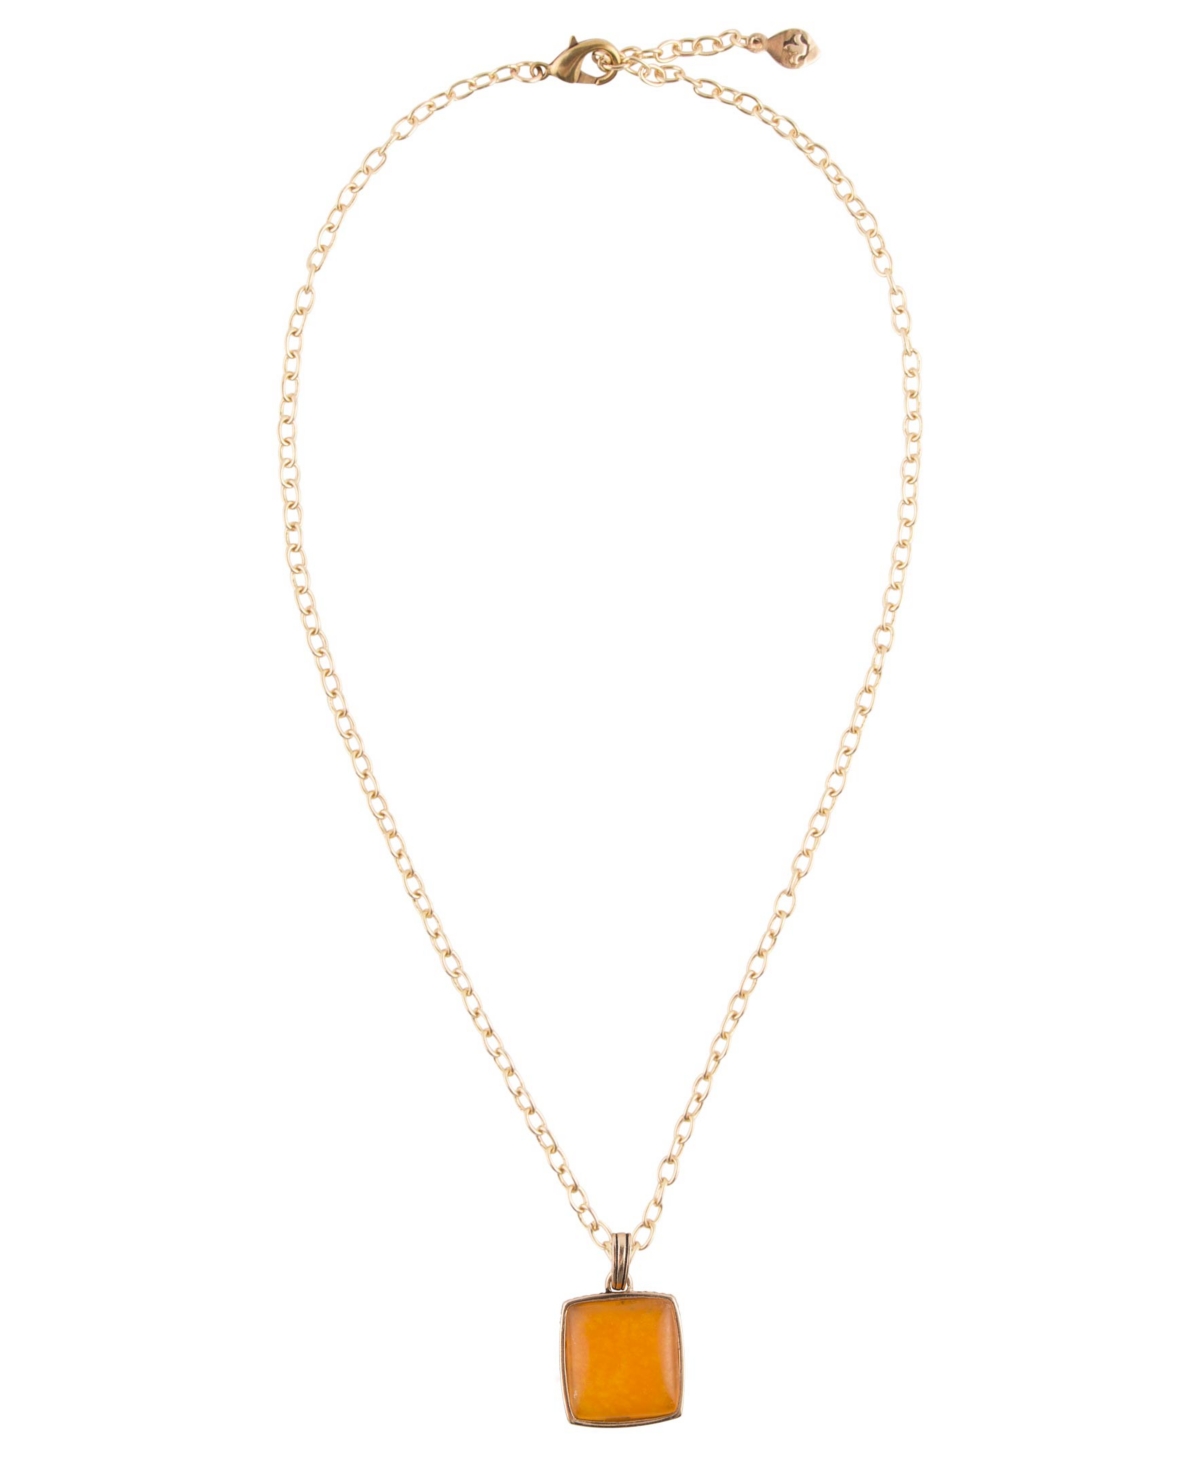 Barse Sunny Genuine Bronze and Yellow Quartz Pendant on Chain Necklace